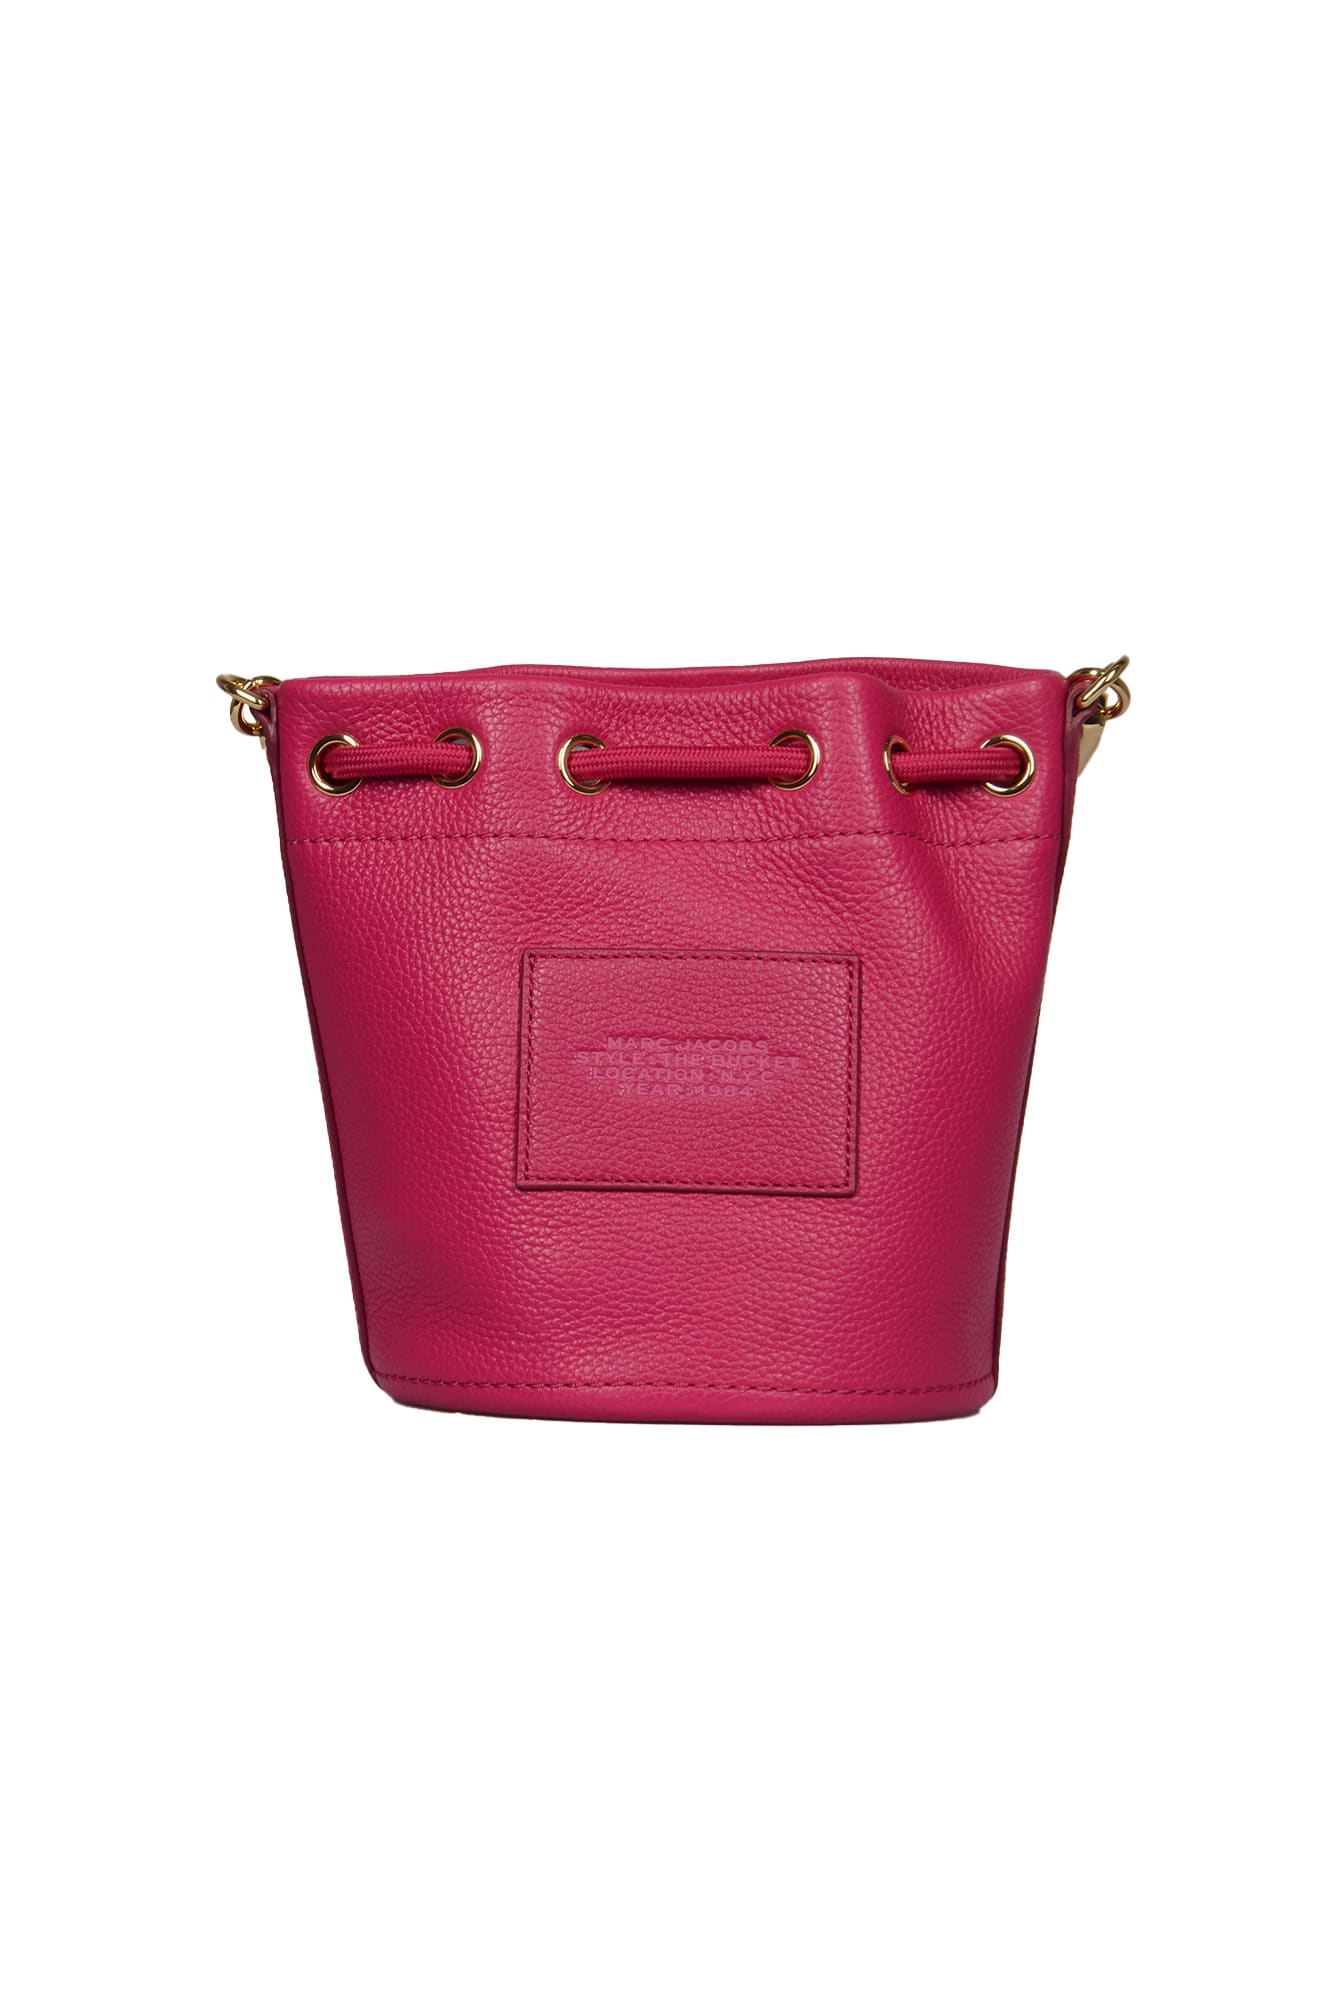 Shop Marc Jacobs The Bucket Bucket Bag In Lipstick Pink